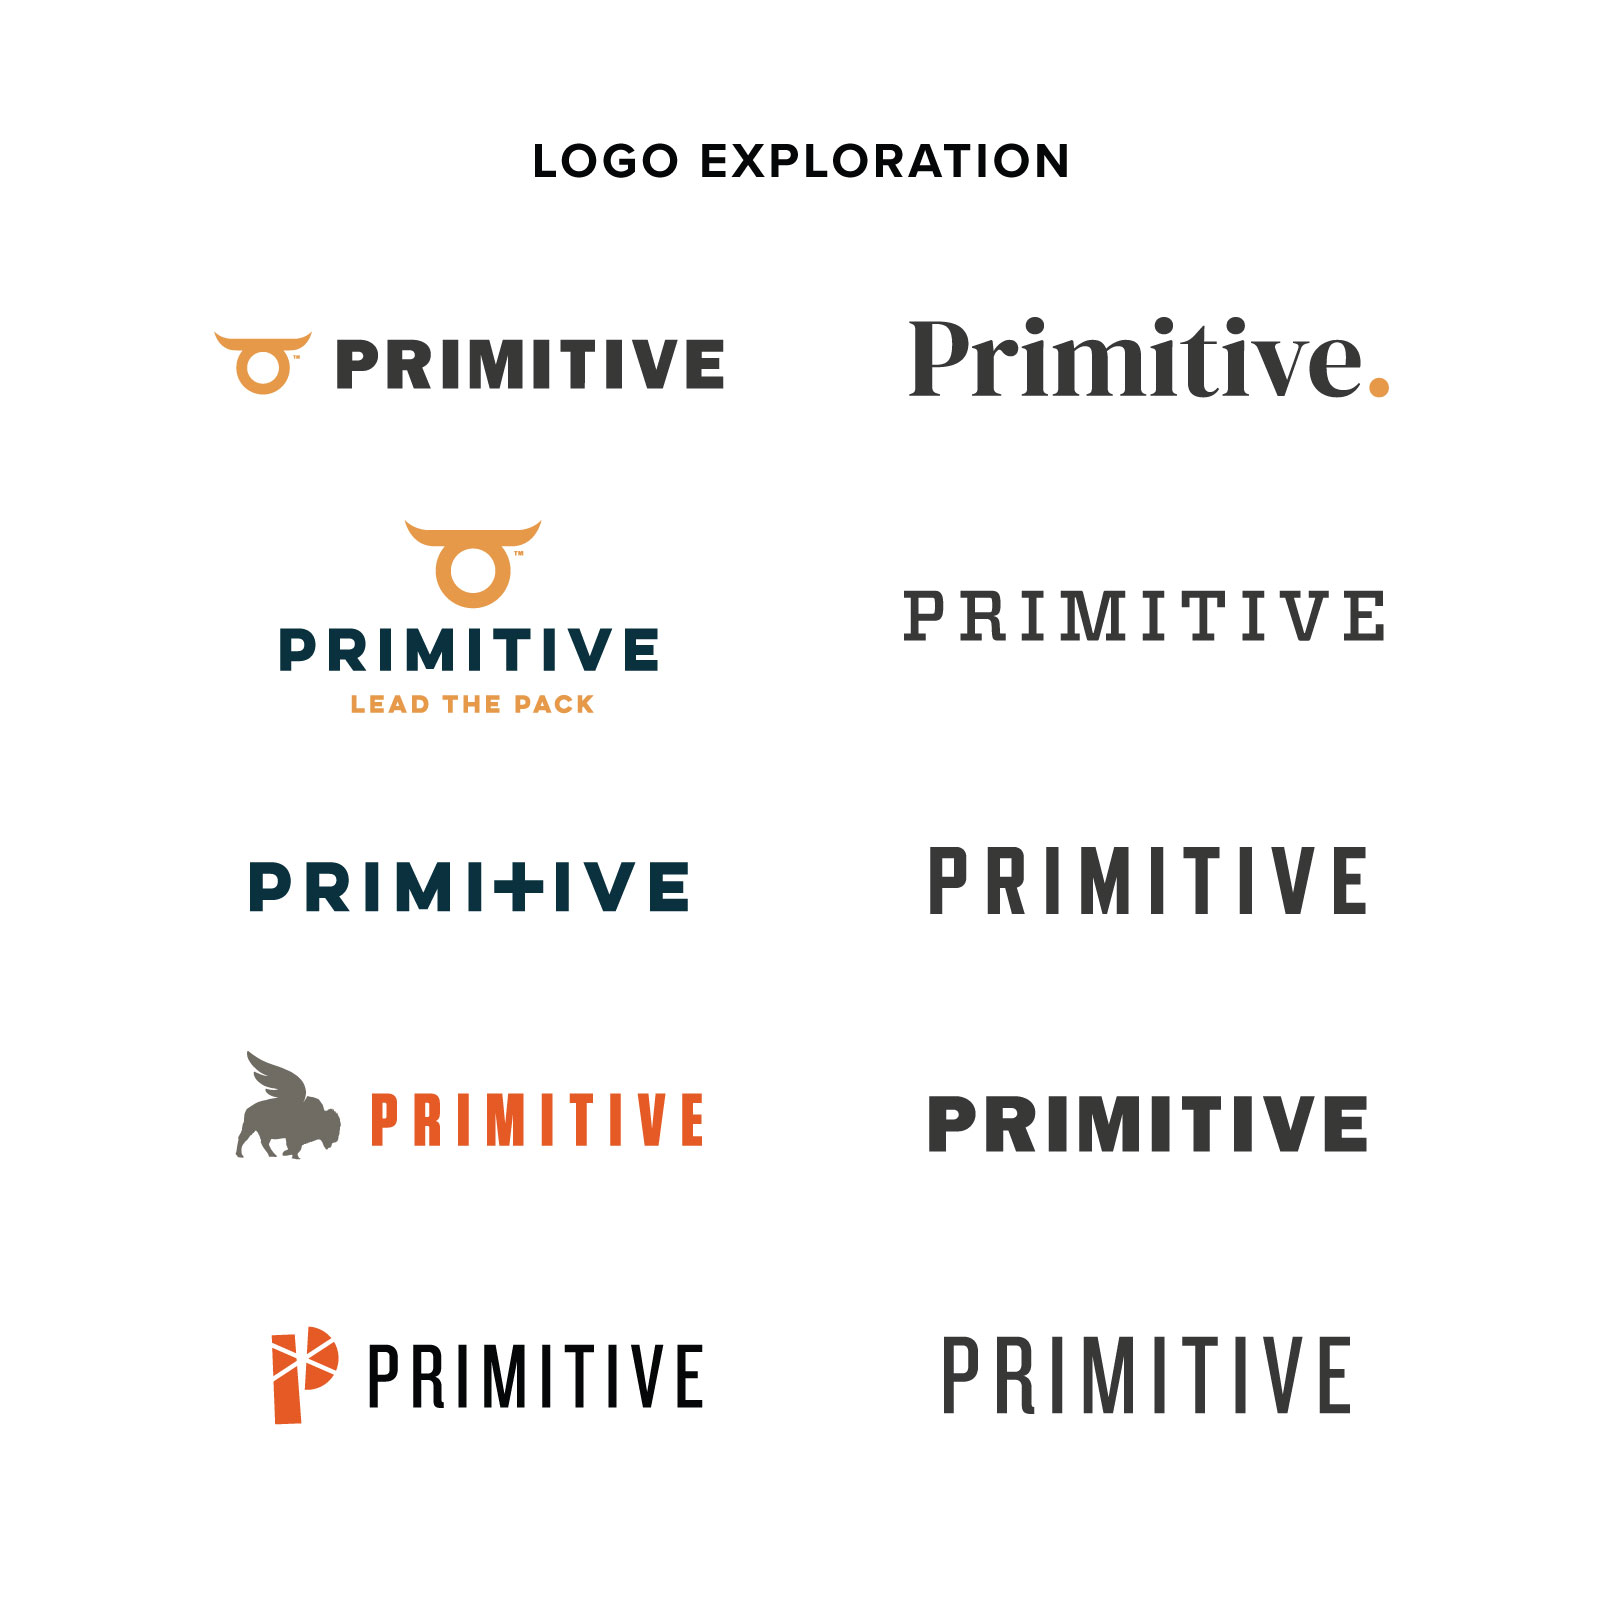 Primitive Logo Exploration